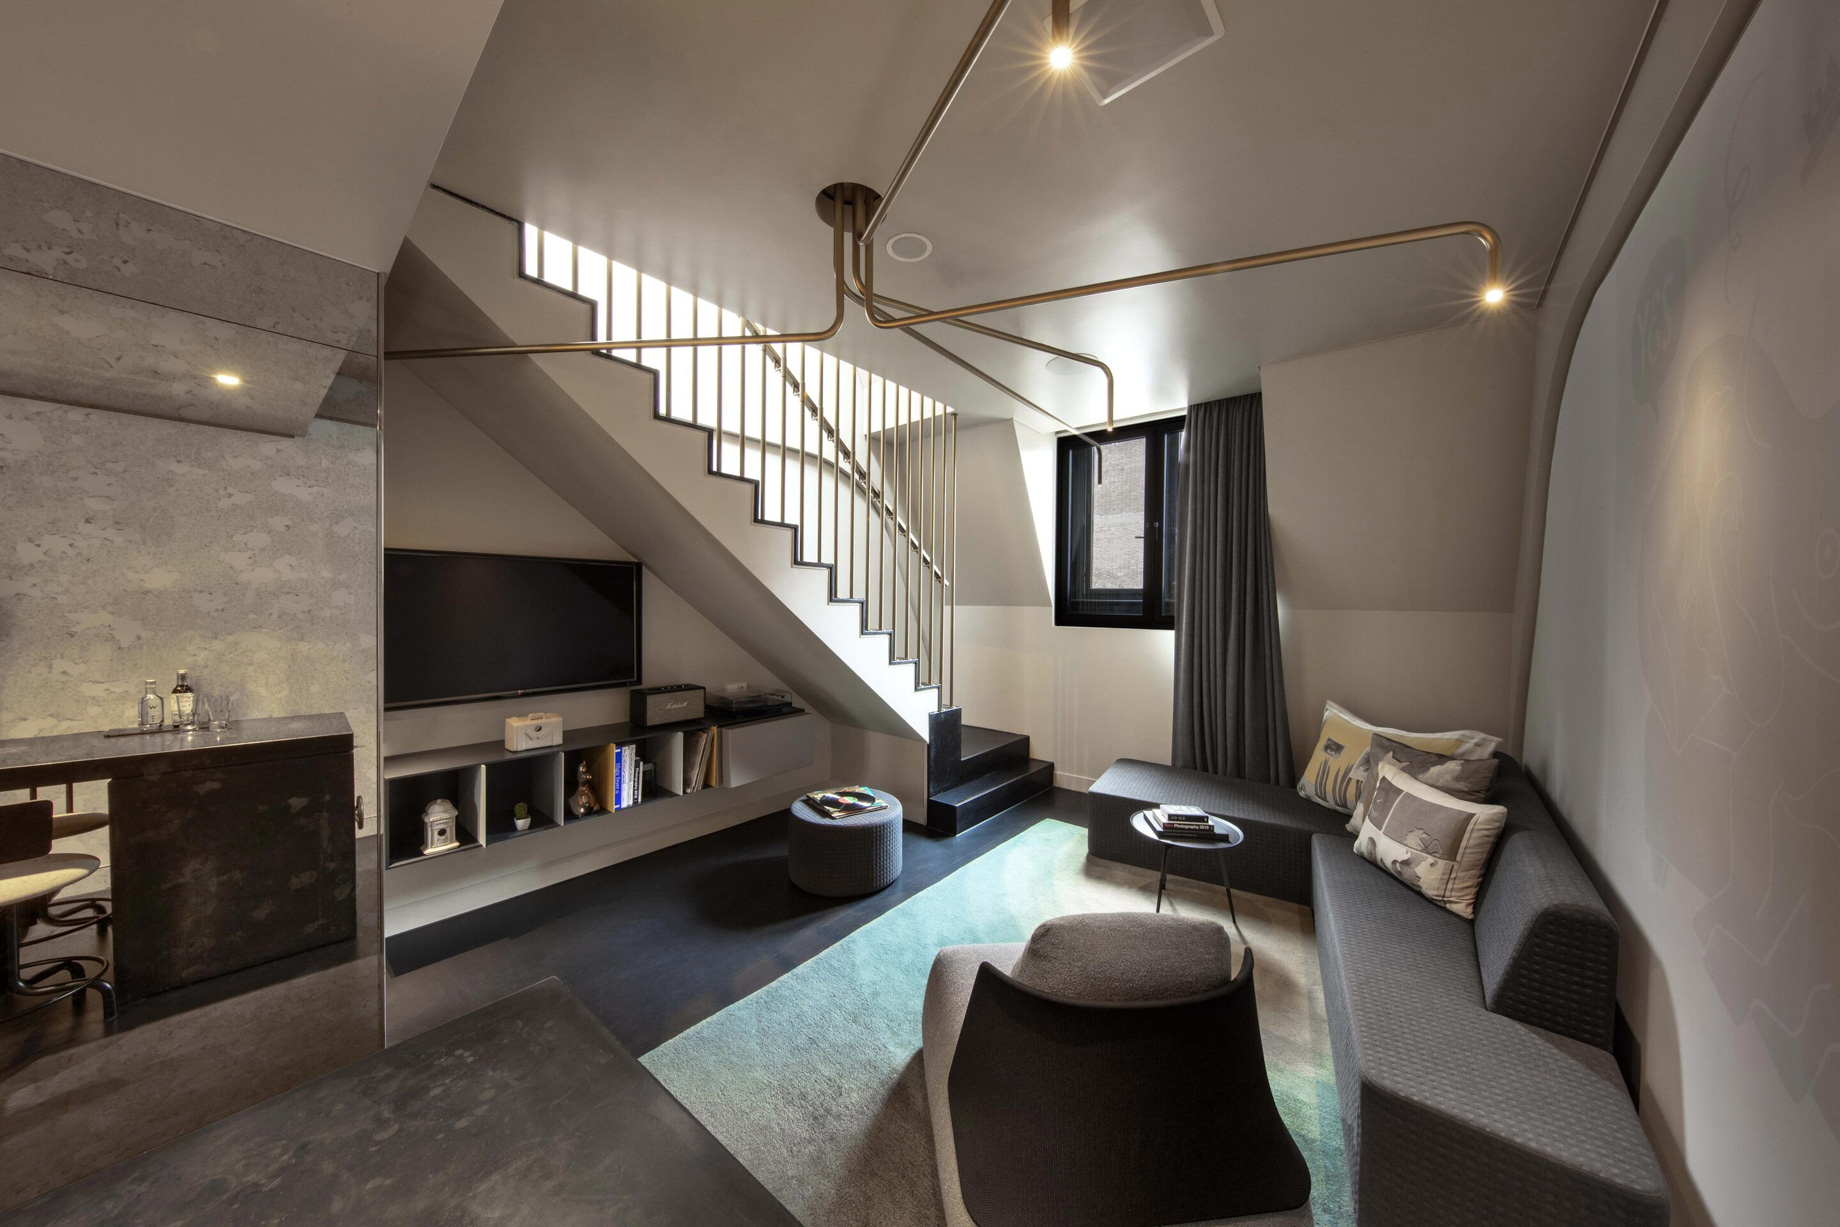 W Amsterdam Hotel – Amsterdam, Netherlands – Marvelous Bank One Bedroom Bi Level Loft Living Room